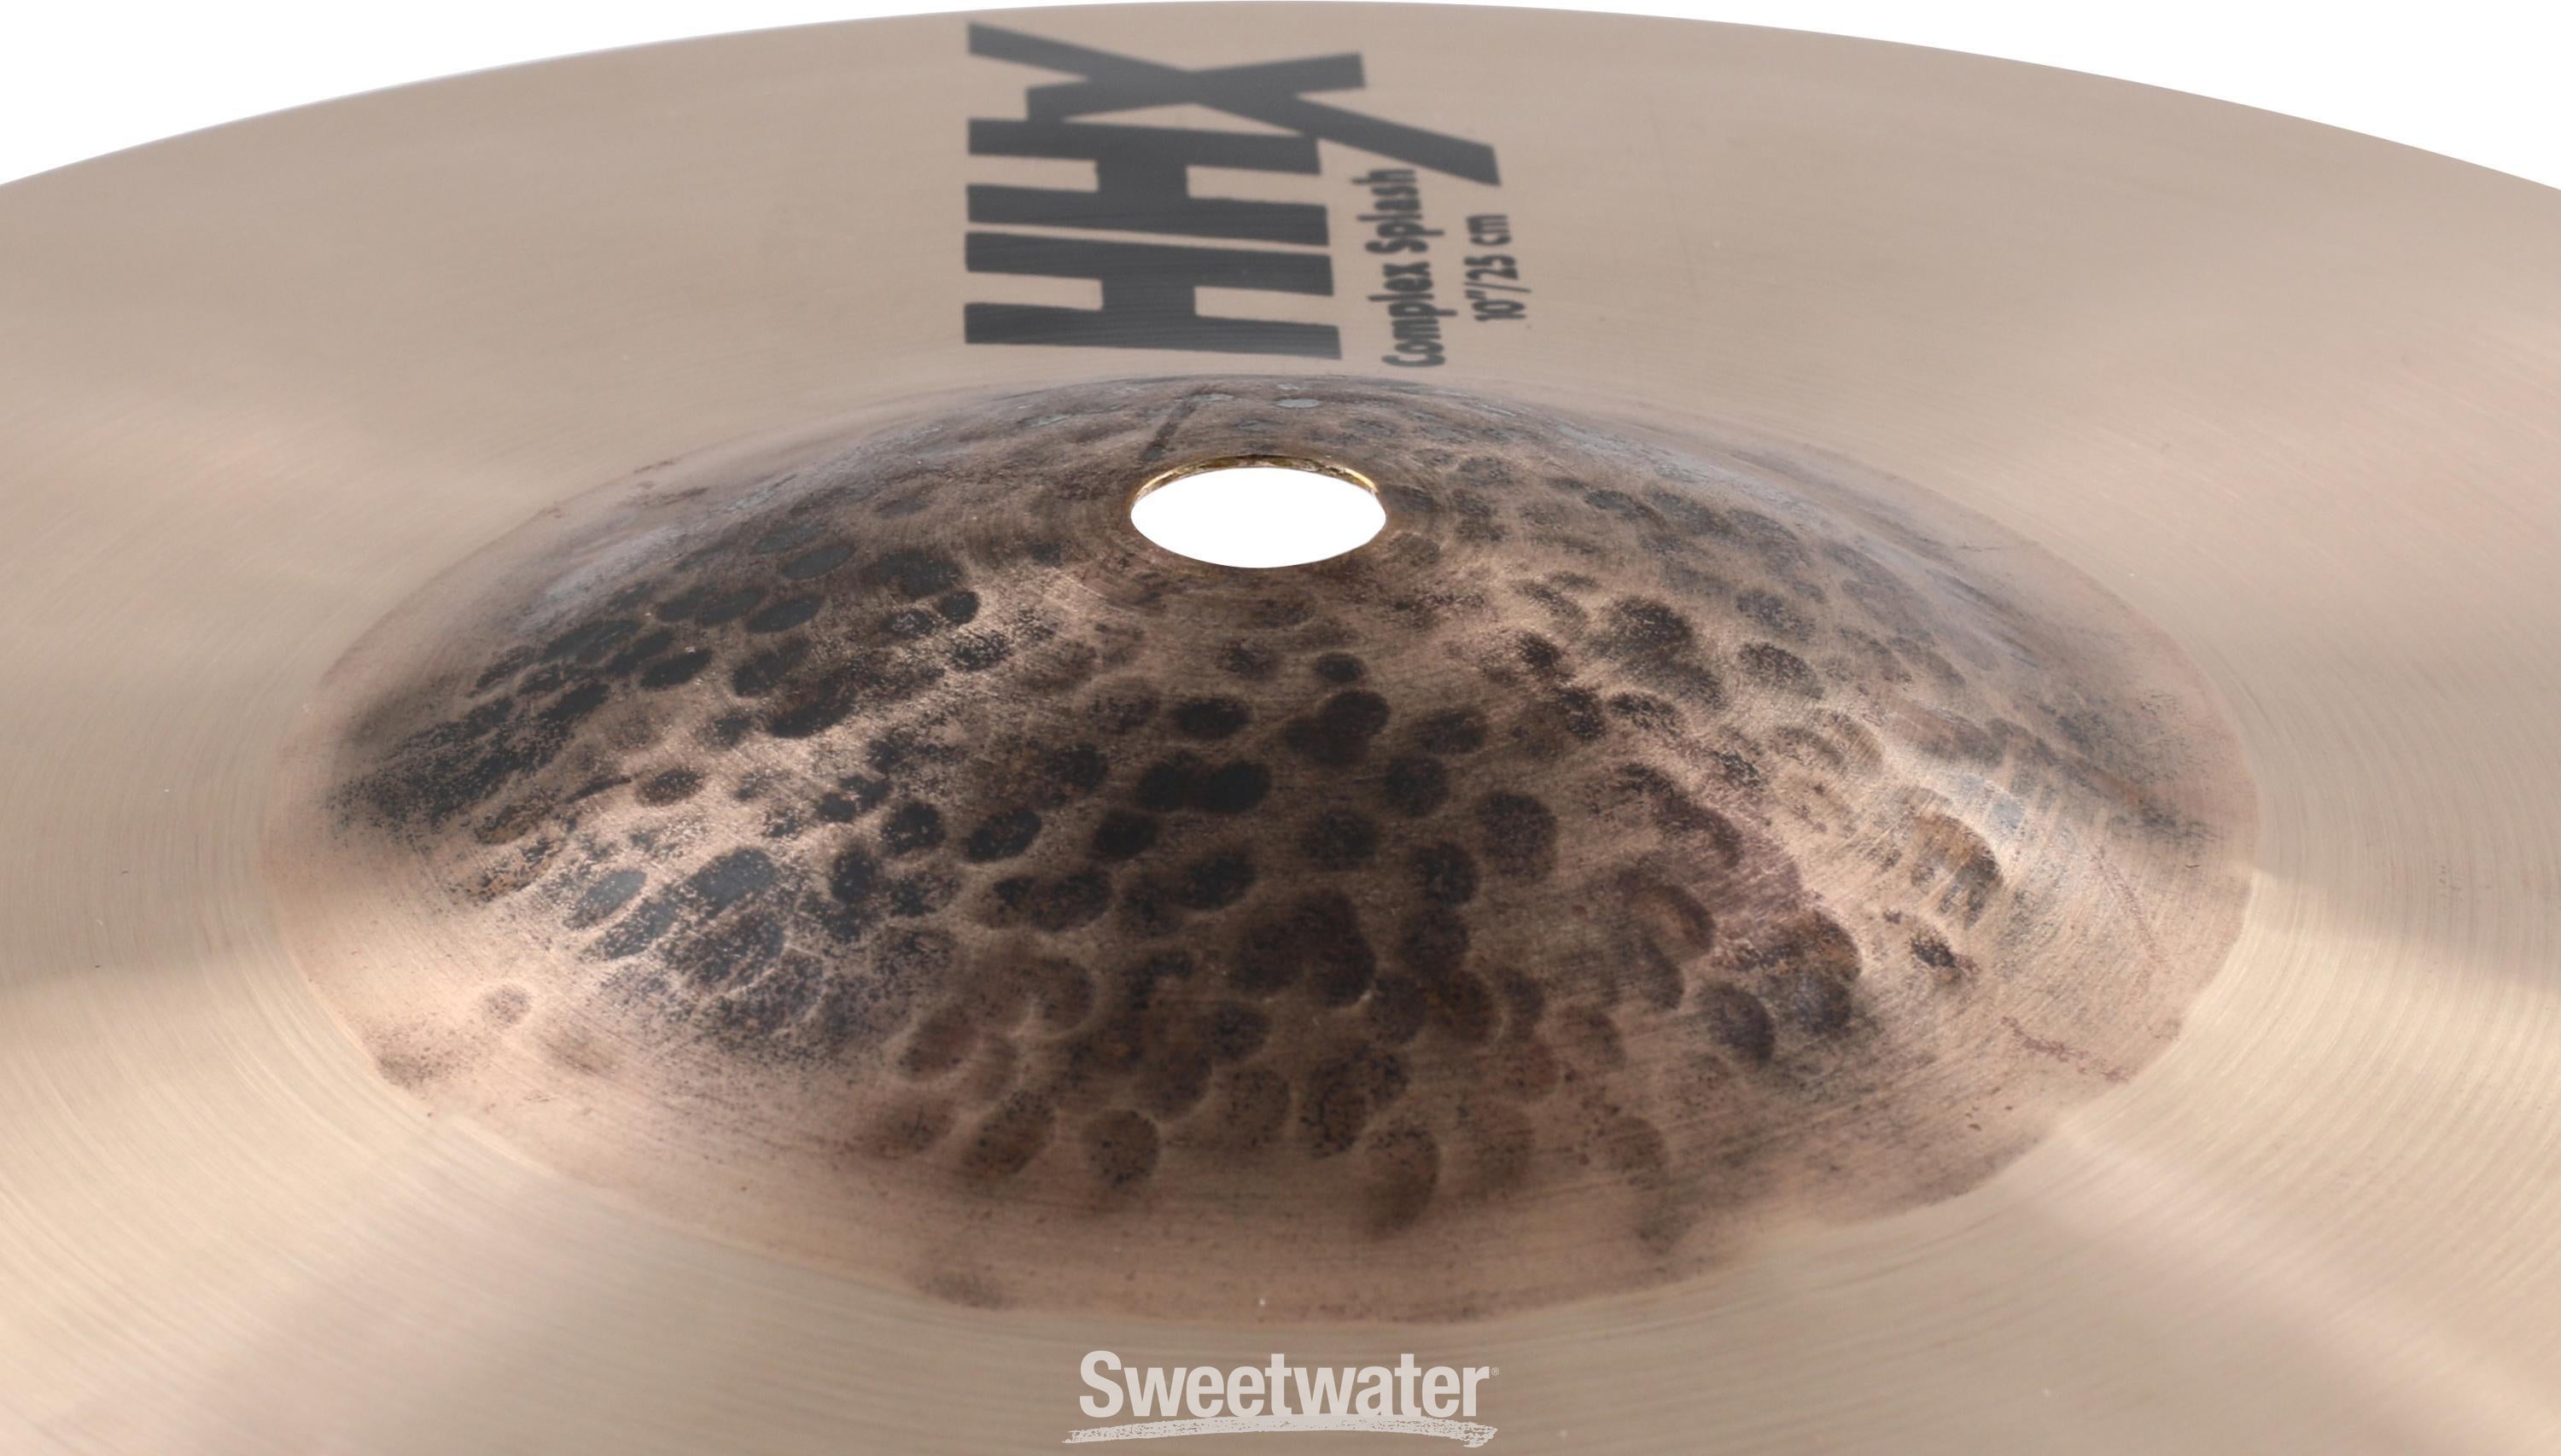 Sabian 10 inch HHX Complex Splash Cymbal